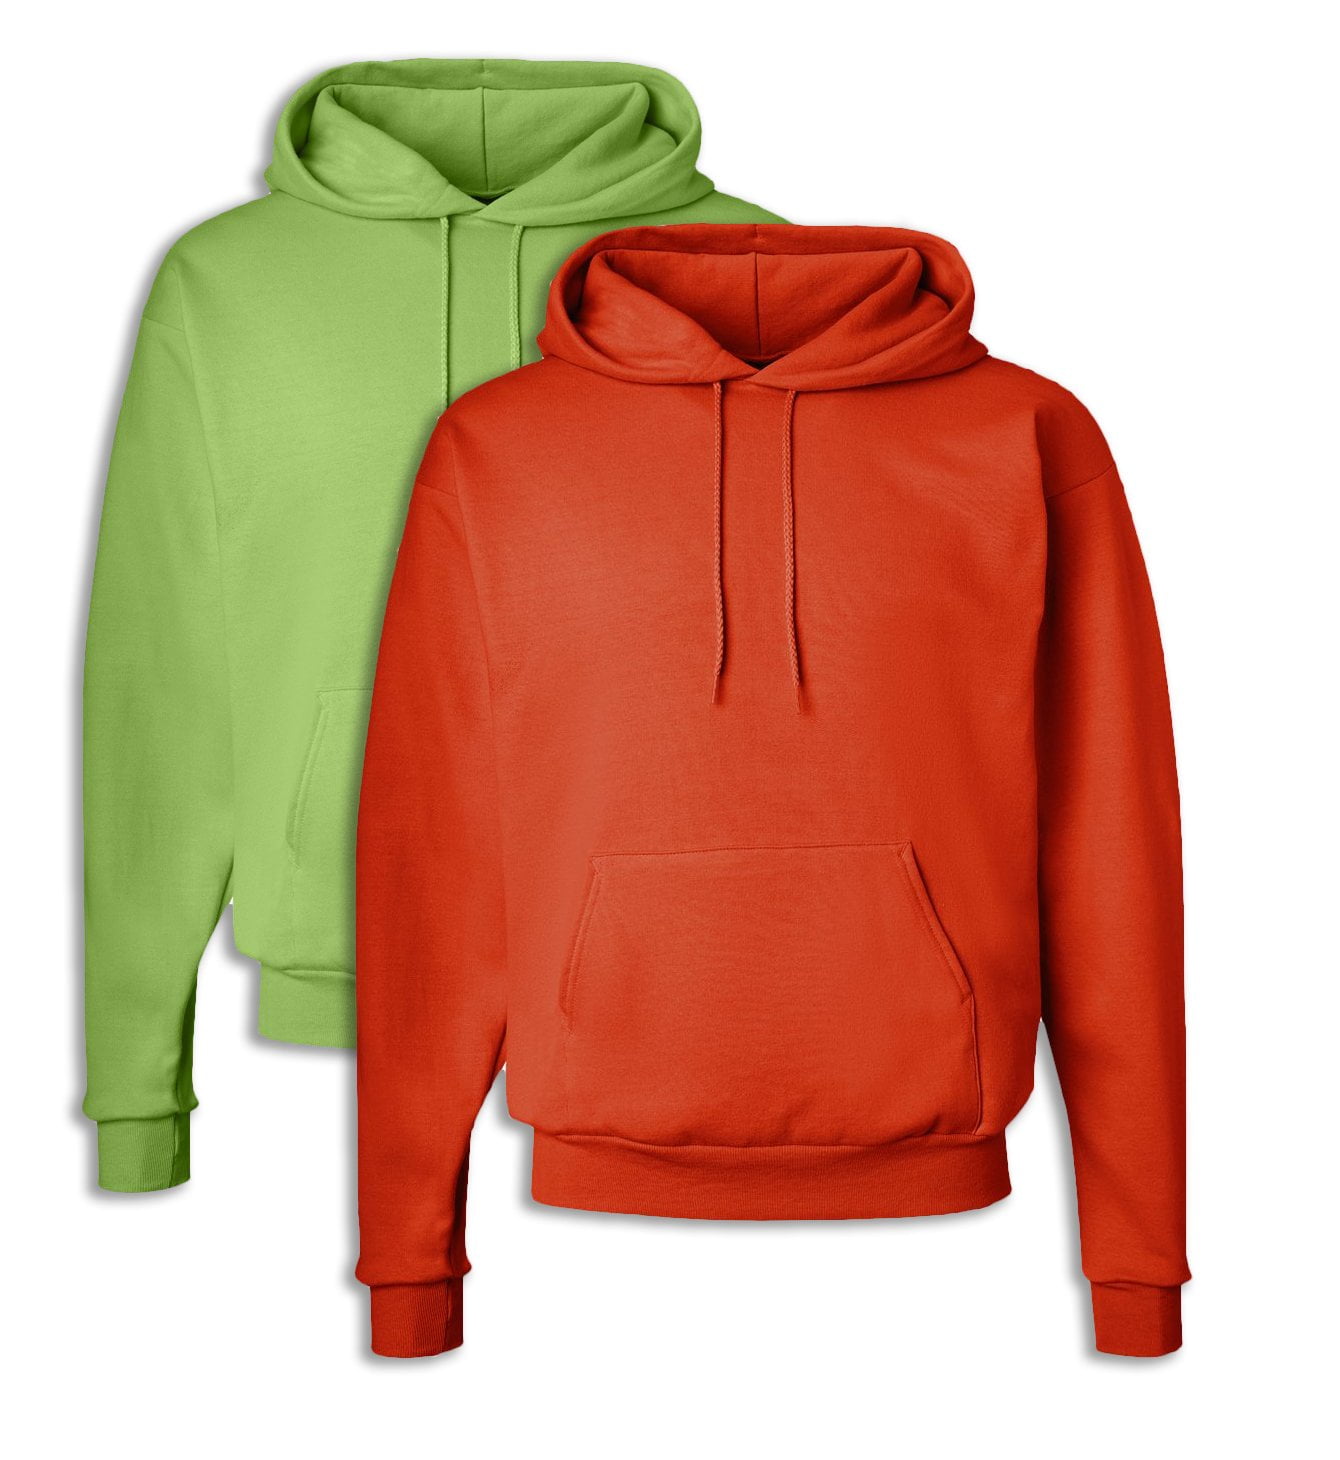 Hanes P170 Mens EcoSmart Hooded Sweatshirt XL 1 Lime 1 Orange Pack of 1 ...